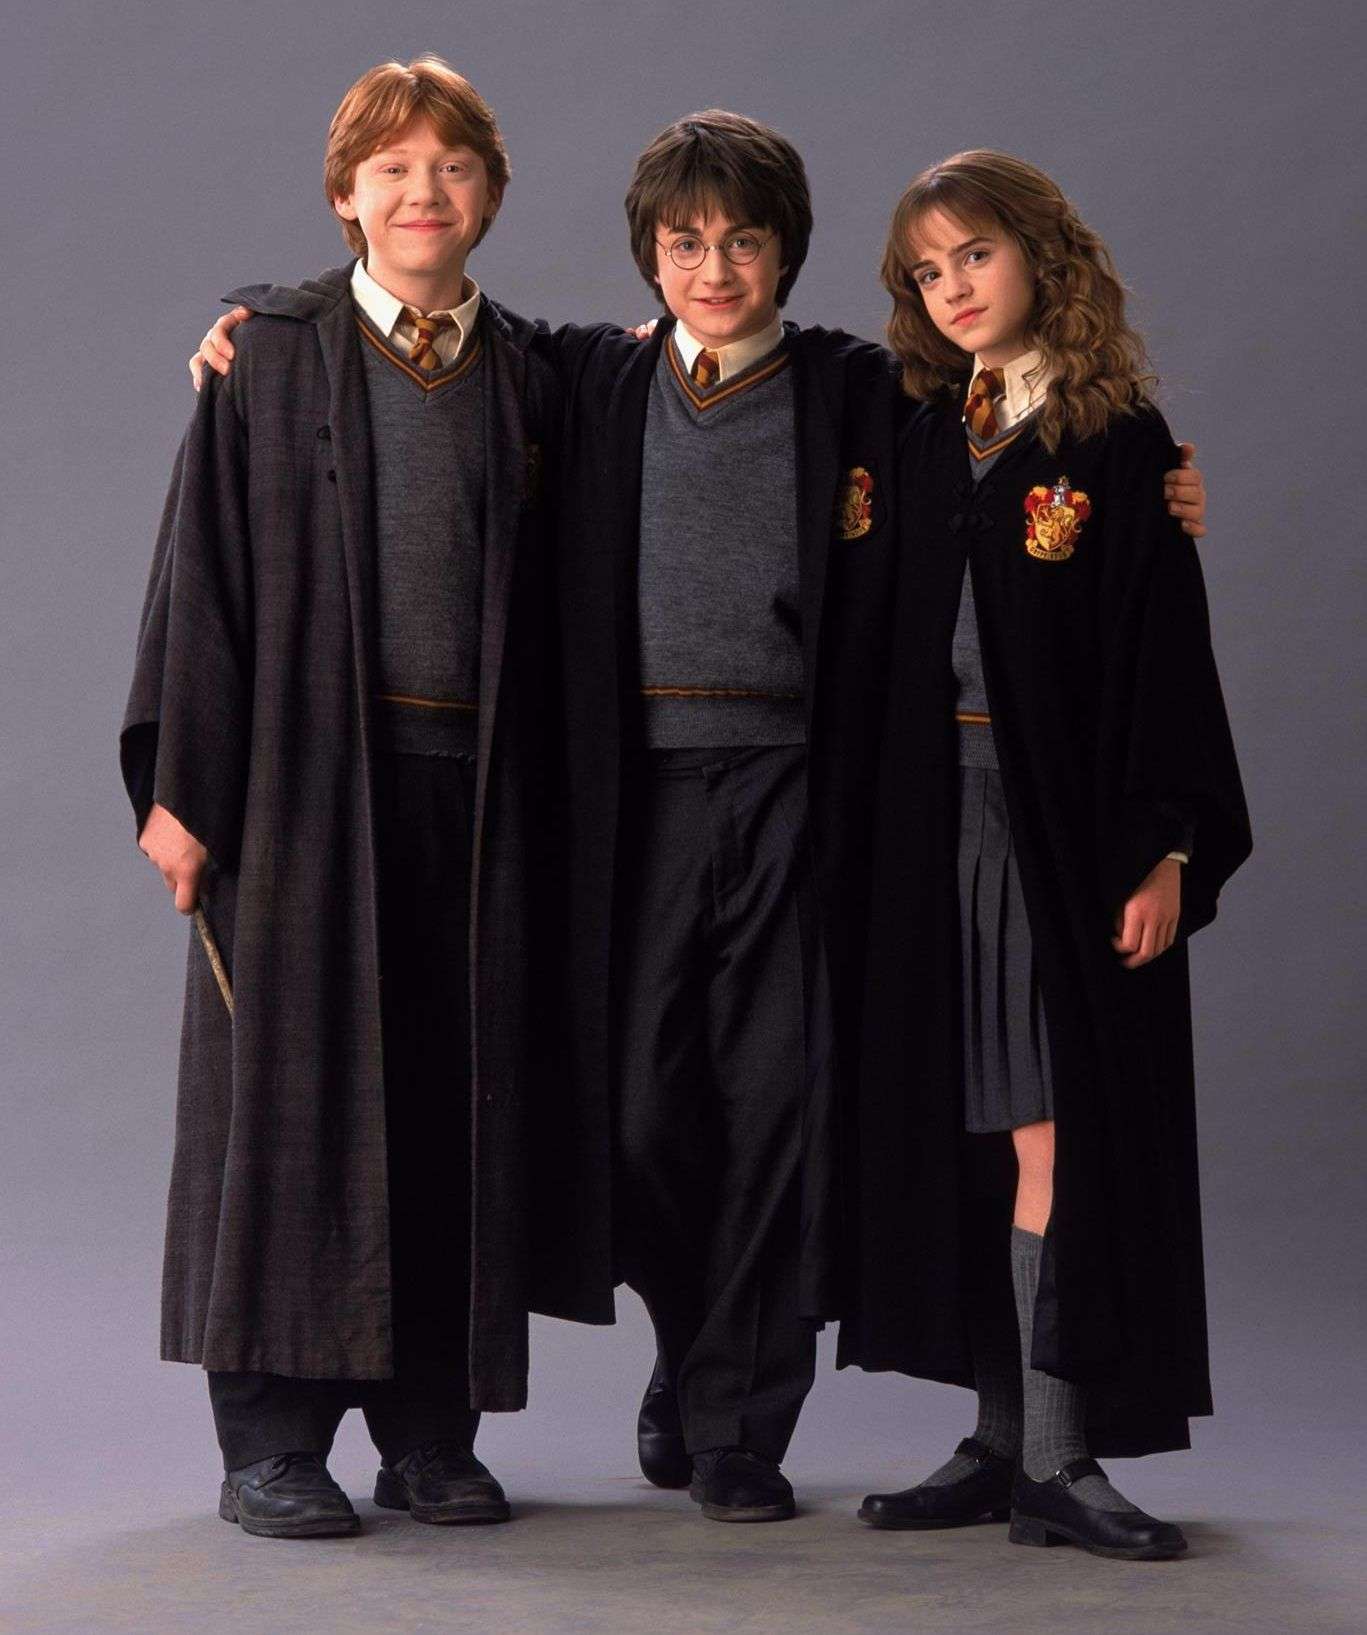 Harry Potter team: Ron, Harry, Hermione